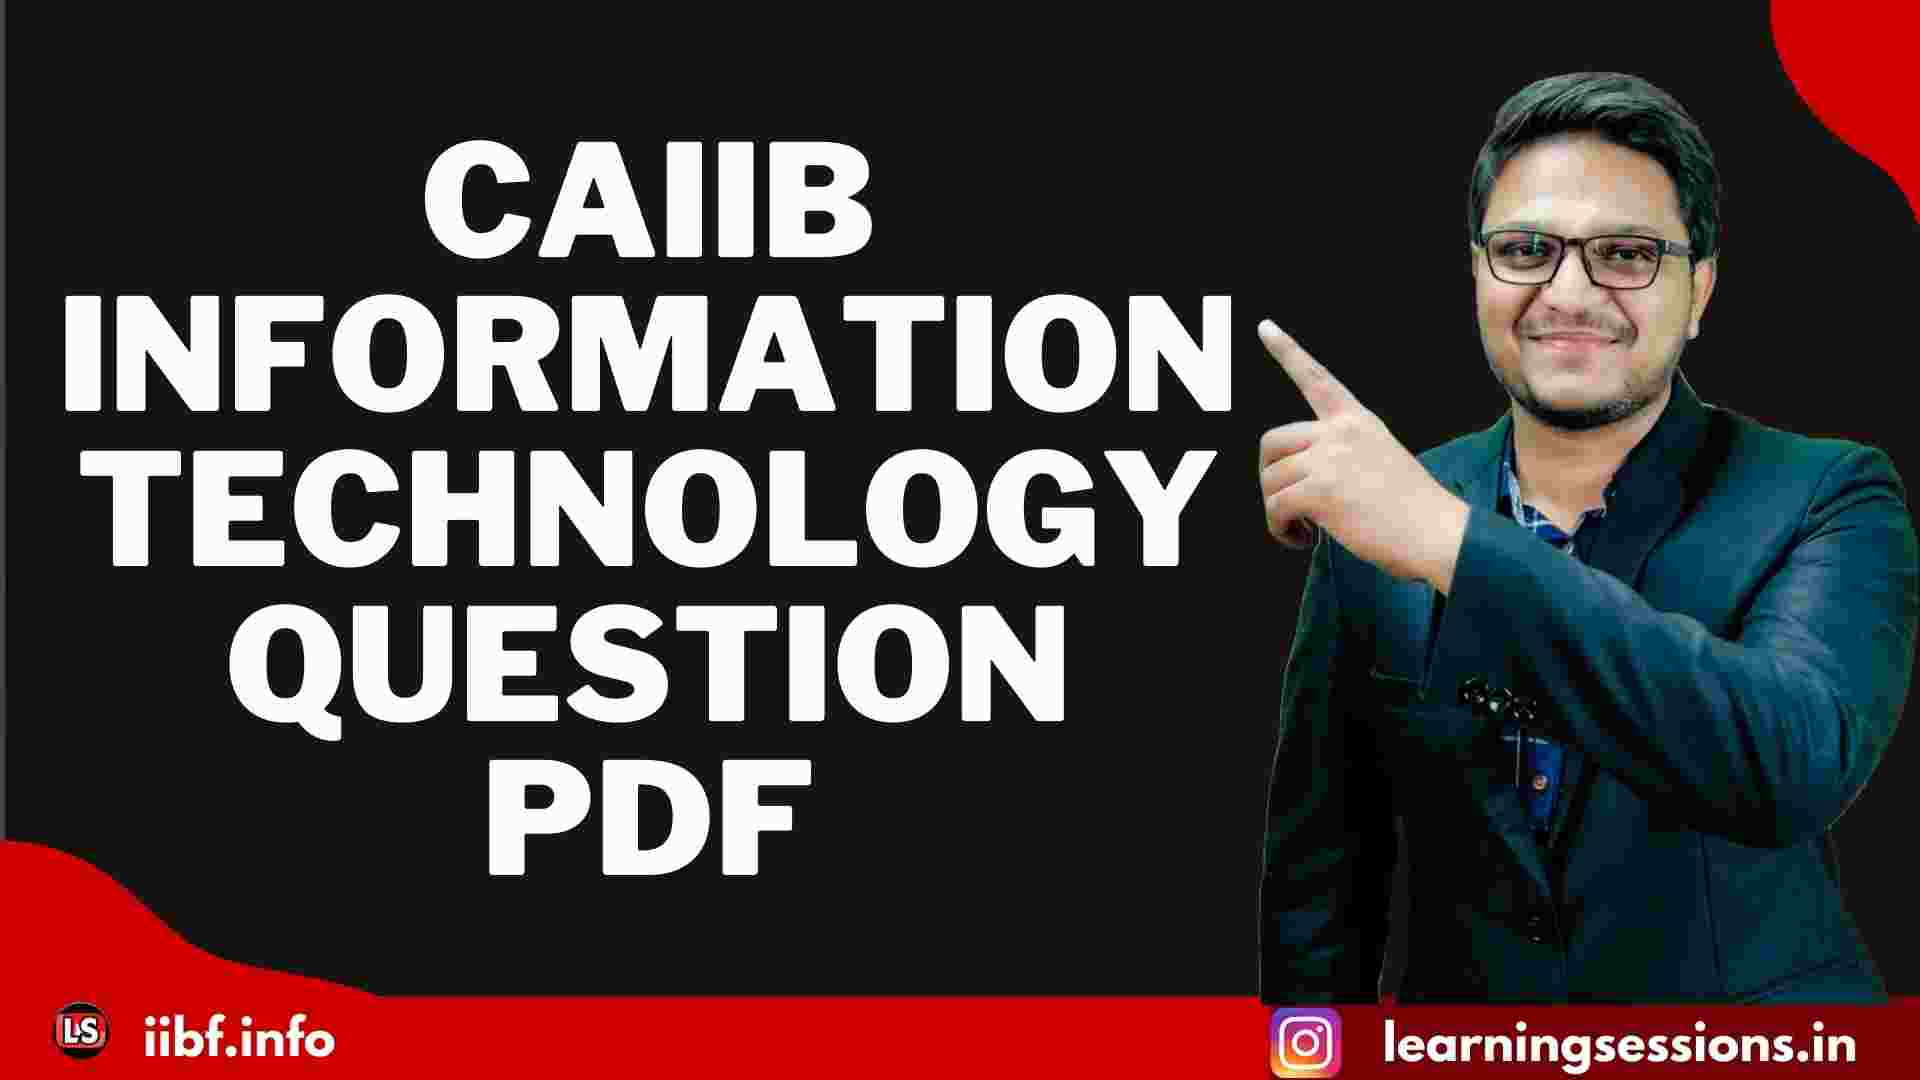 IIBF CAIIB INFORMATION TECHNOLOGY QUESTION PDF